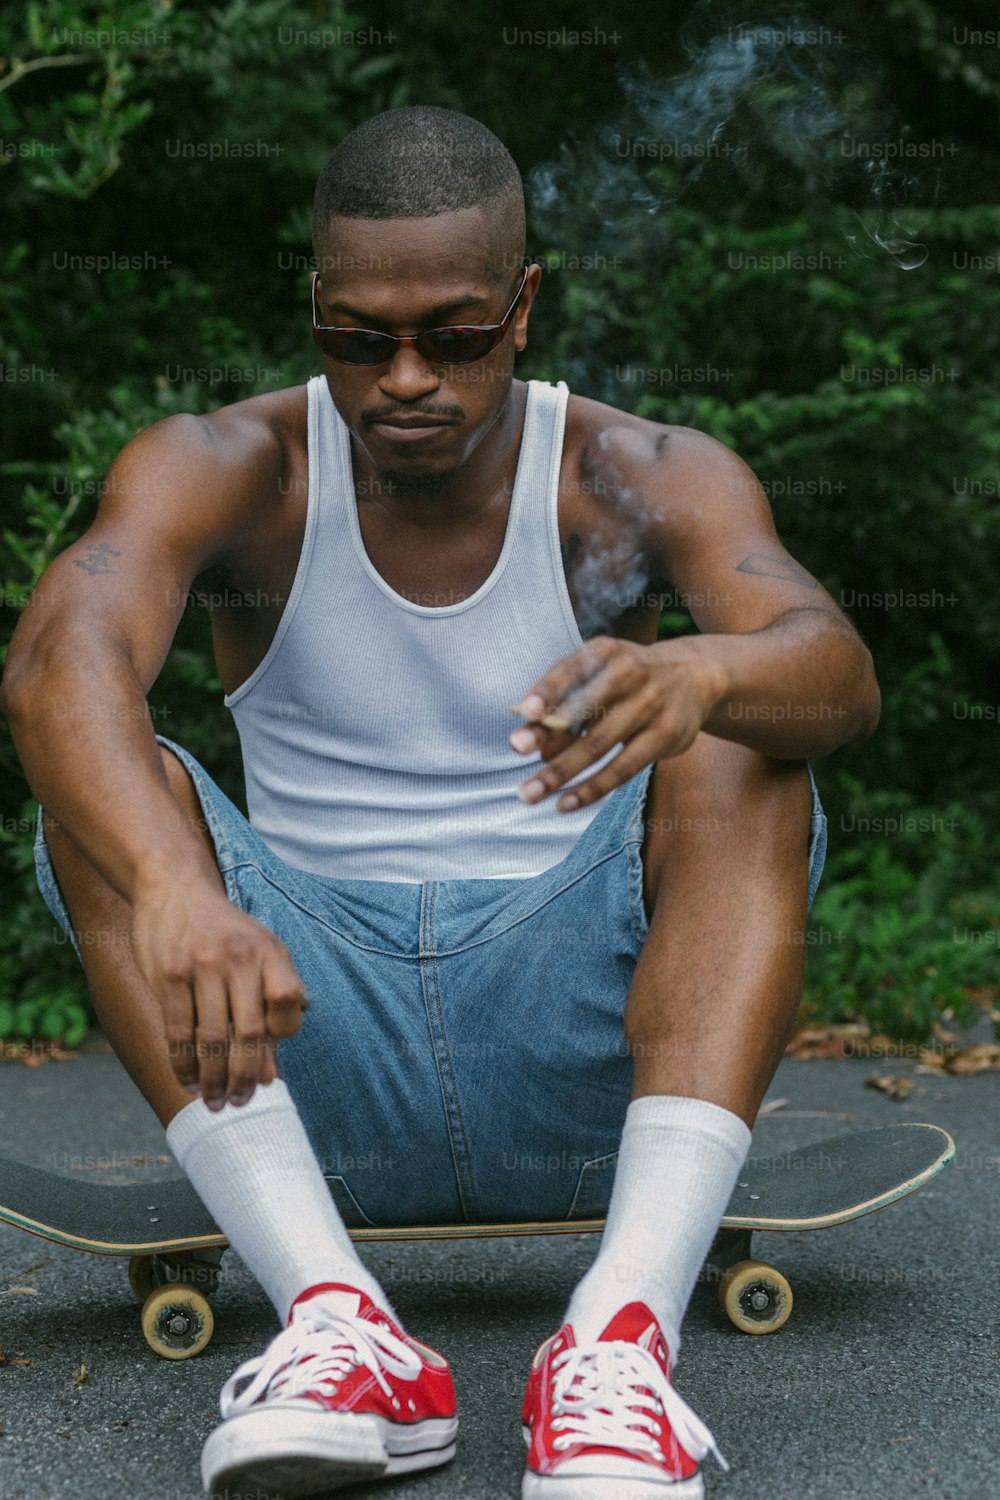 a man sitting on a skateboard smoking a cigarette